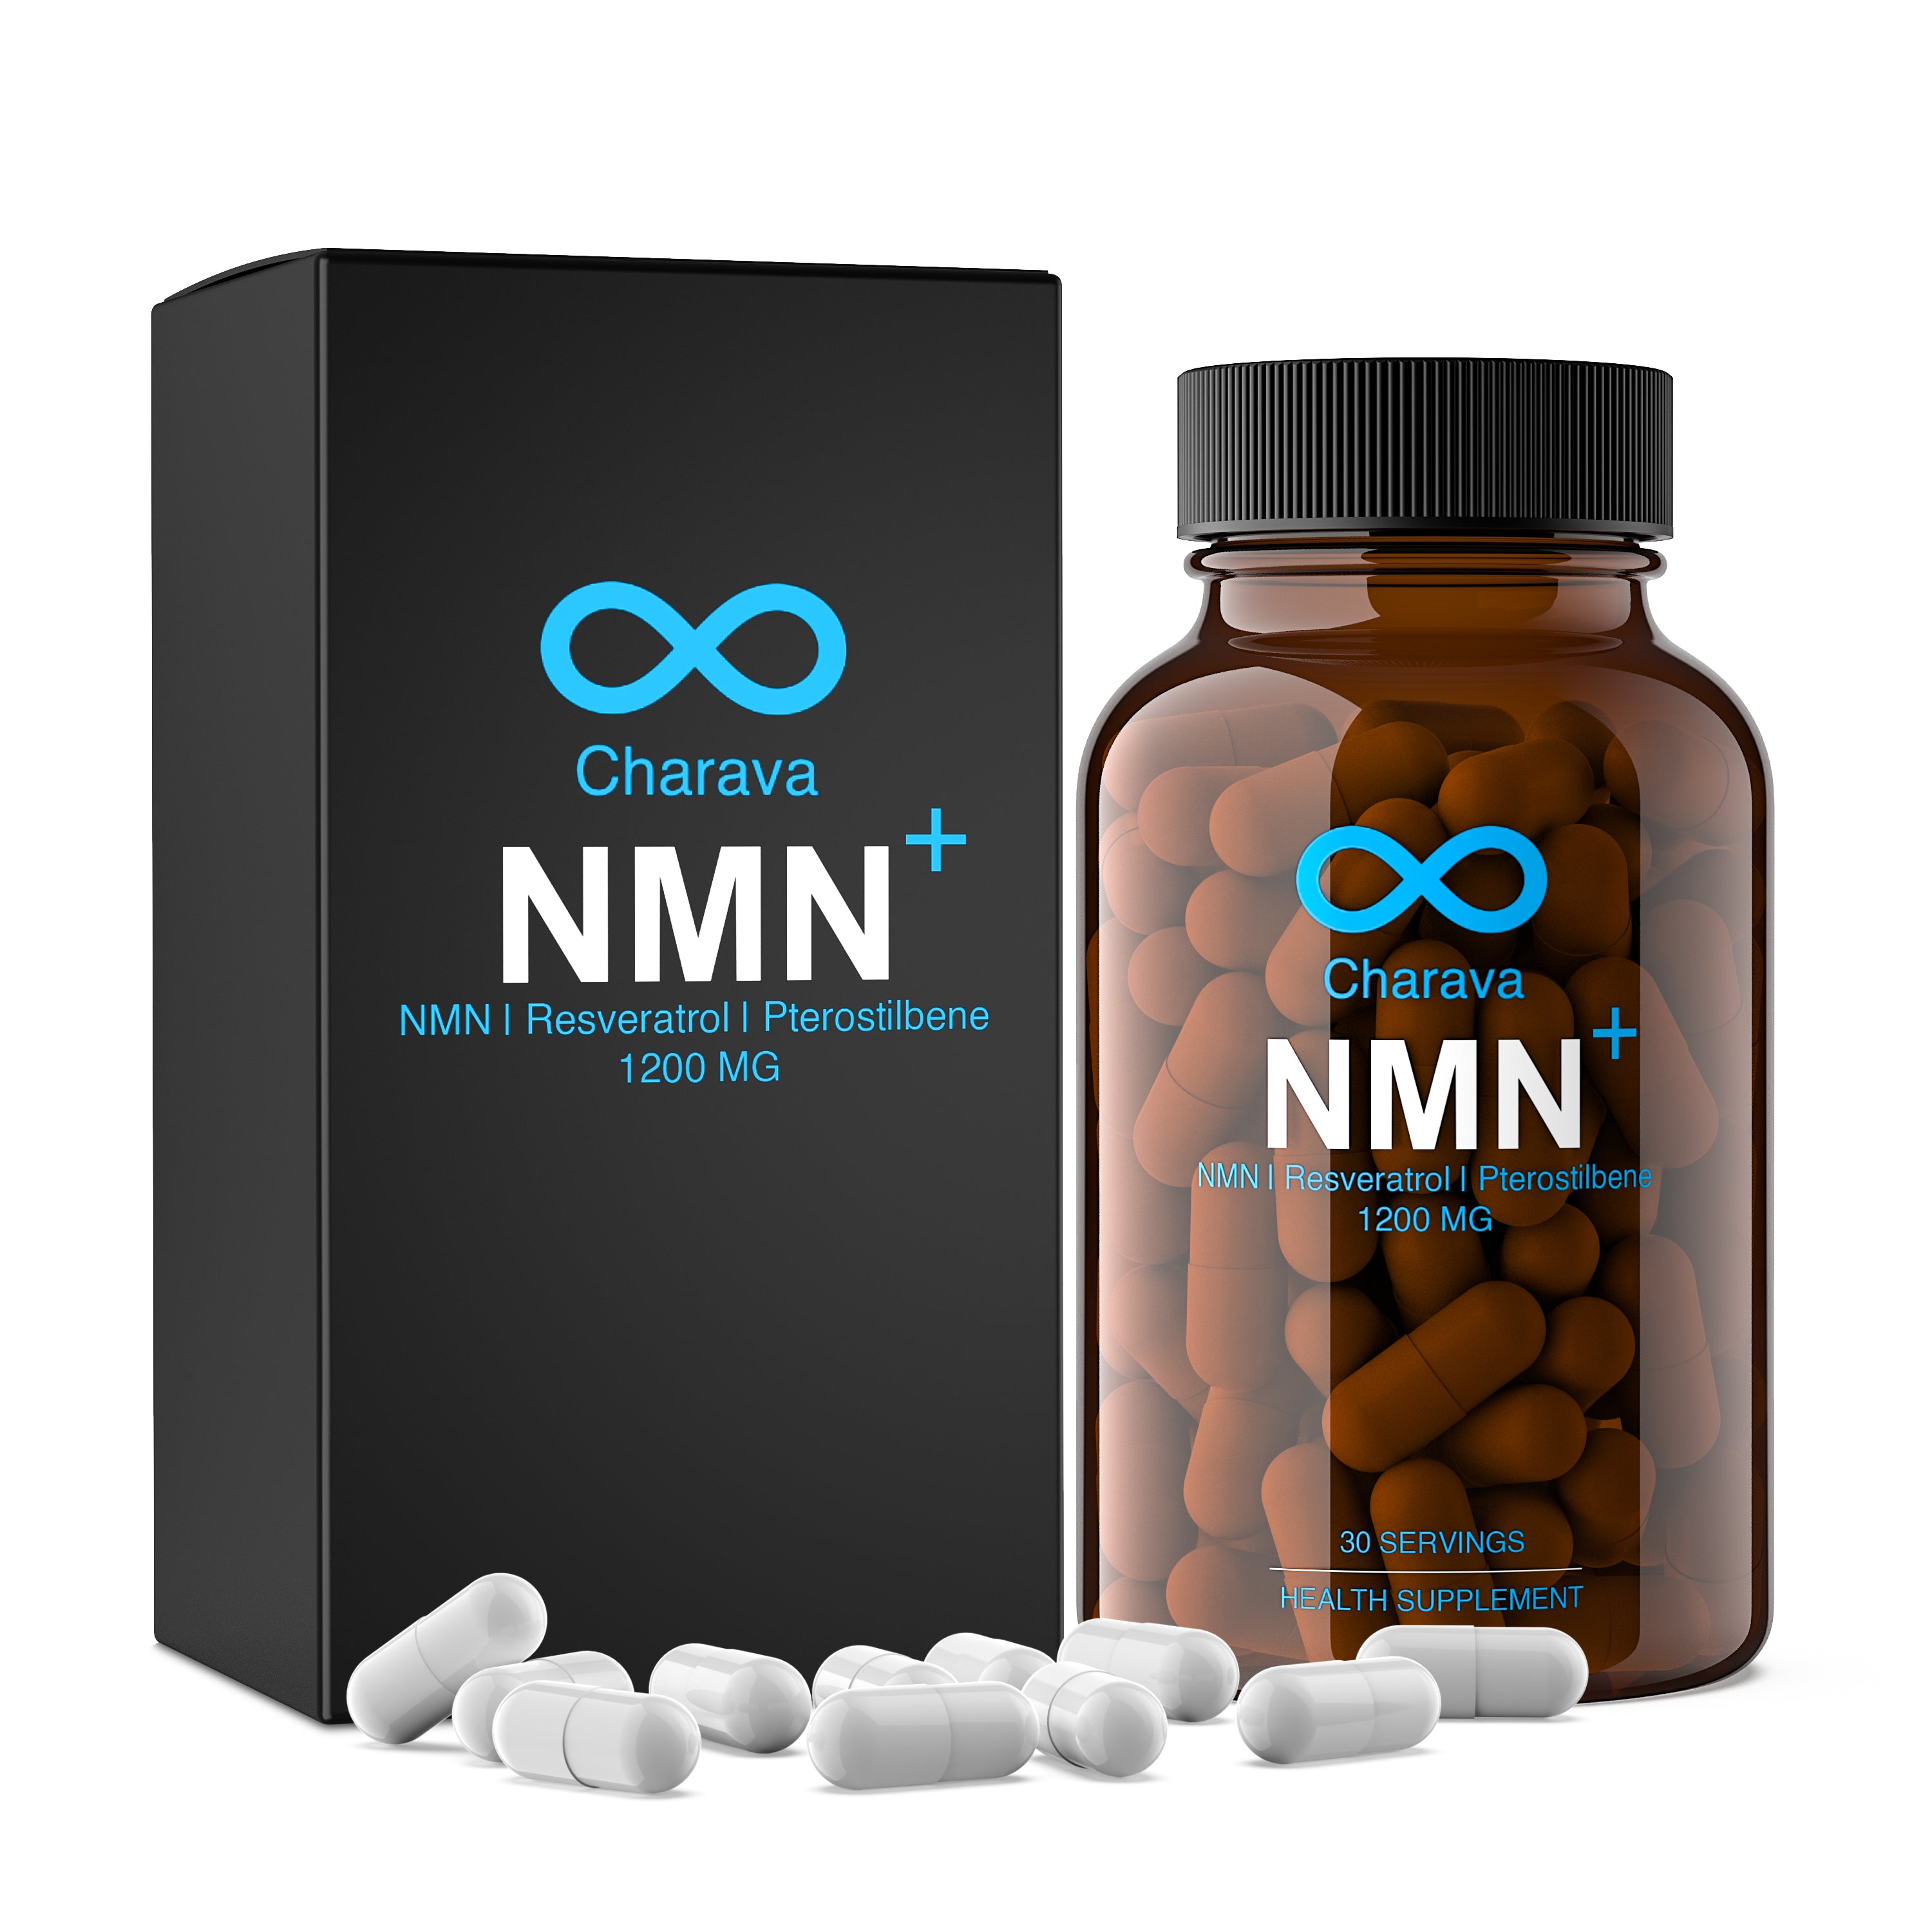 NMN+1200 (NMN, Resveratrol, Pterostilbene)